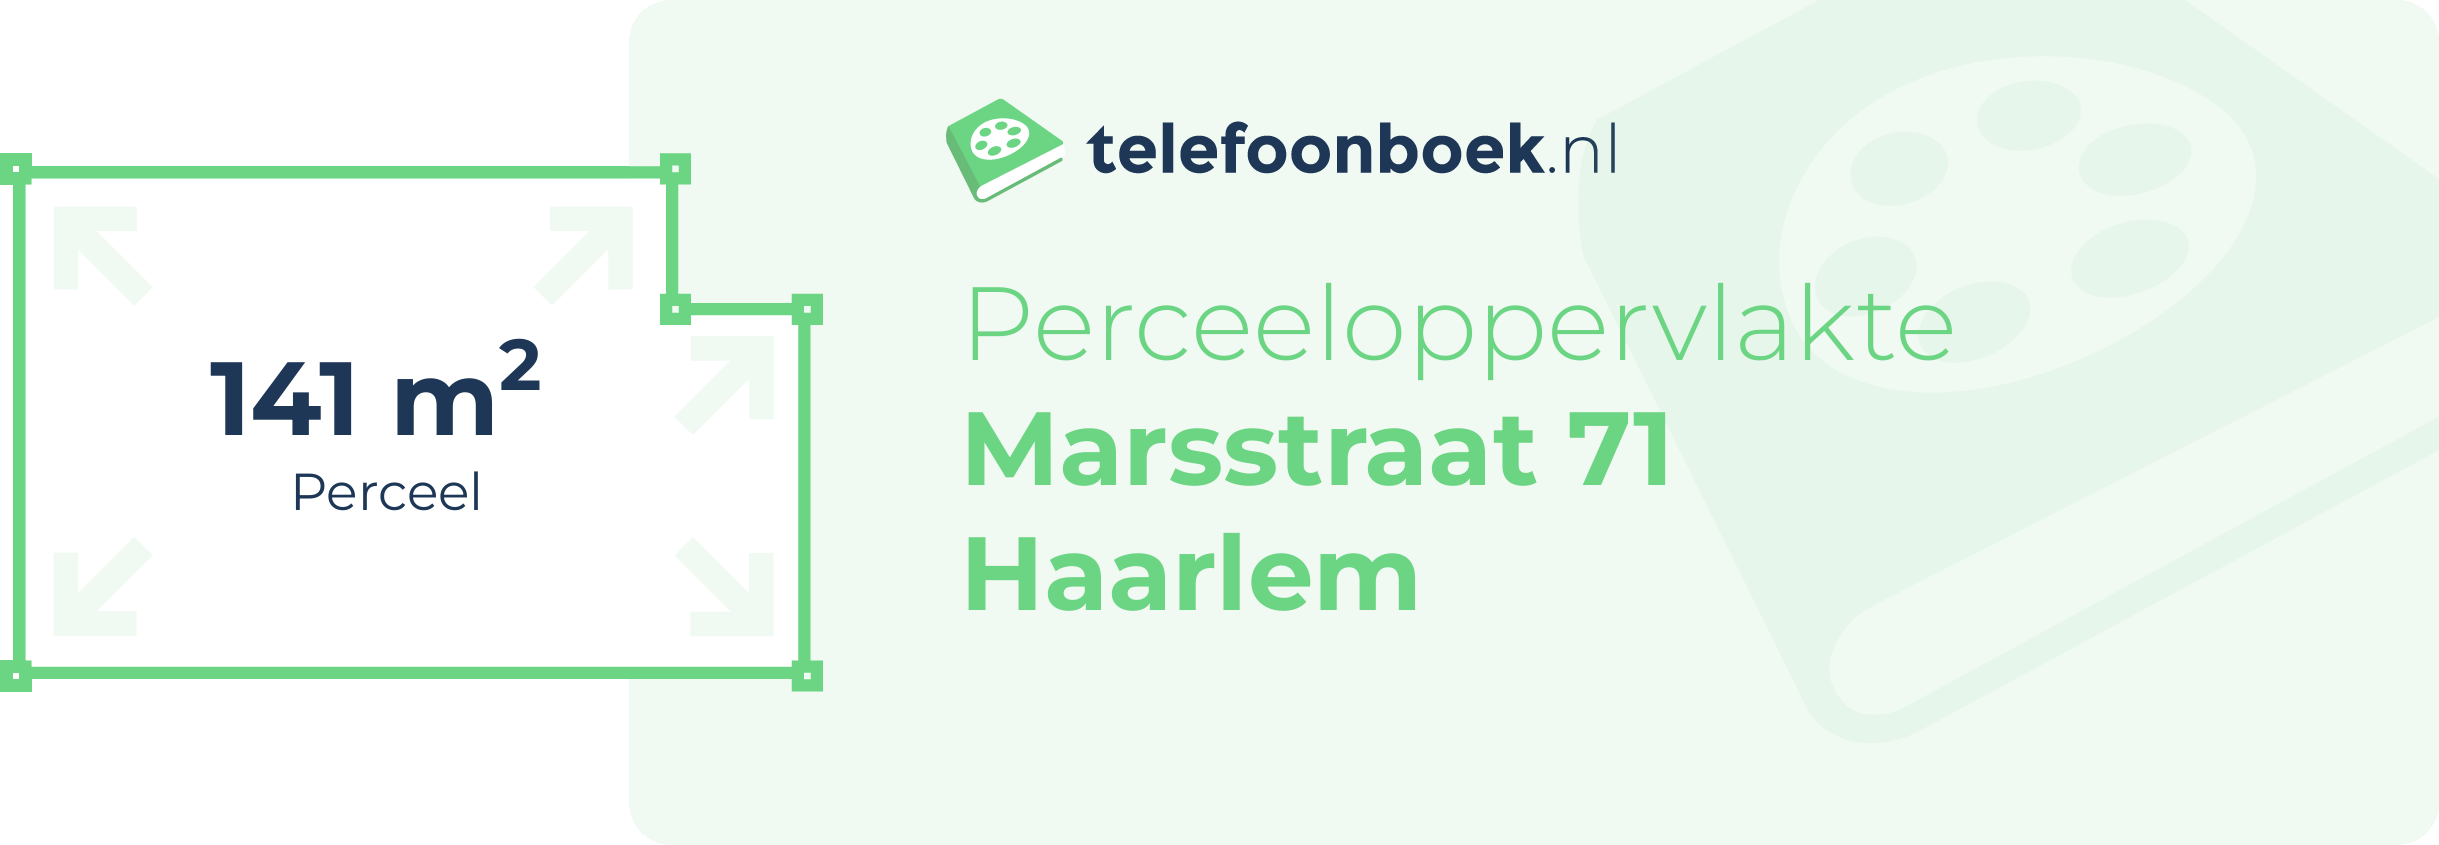 Perceeloppervlakte Marsstraat 71 Haarlem